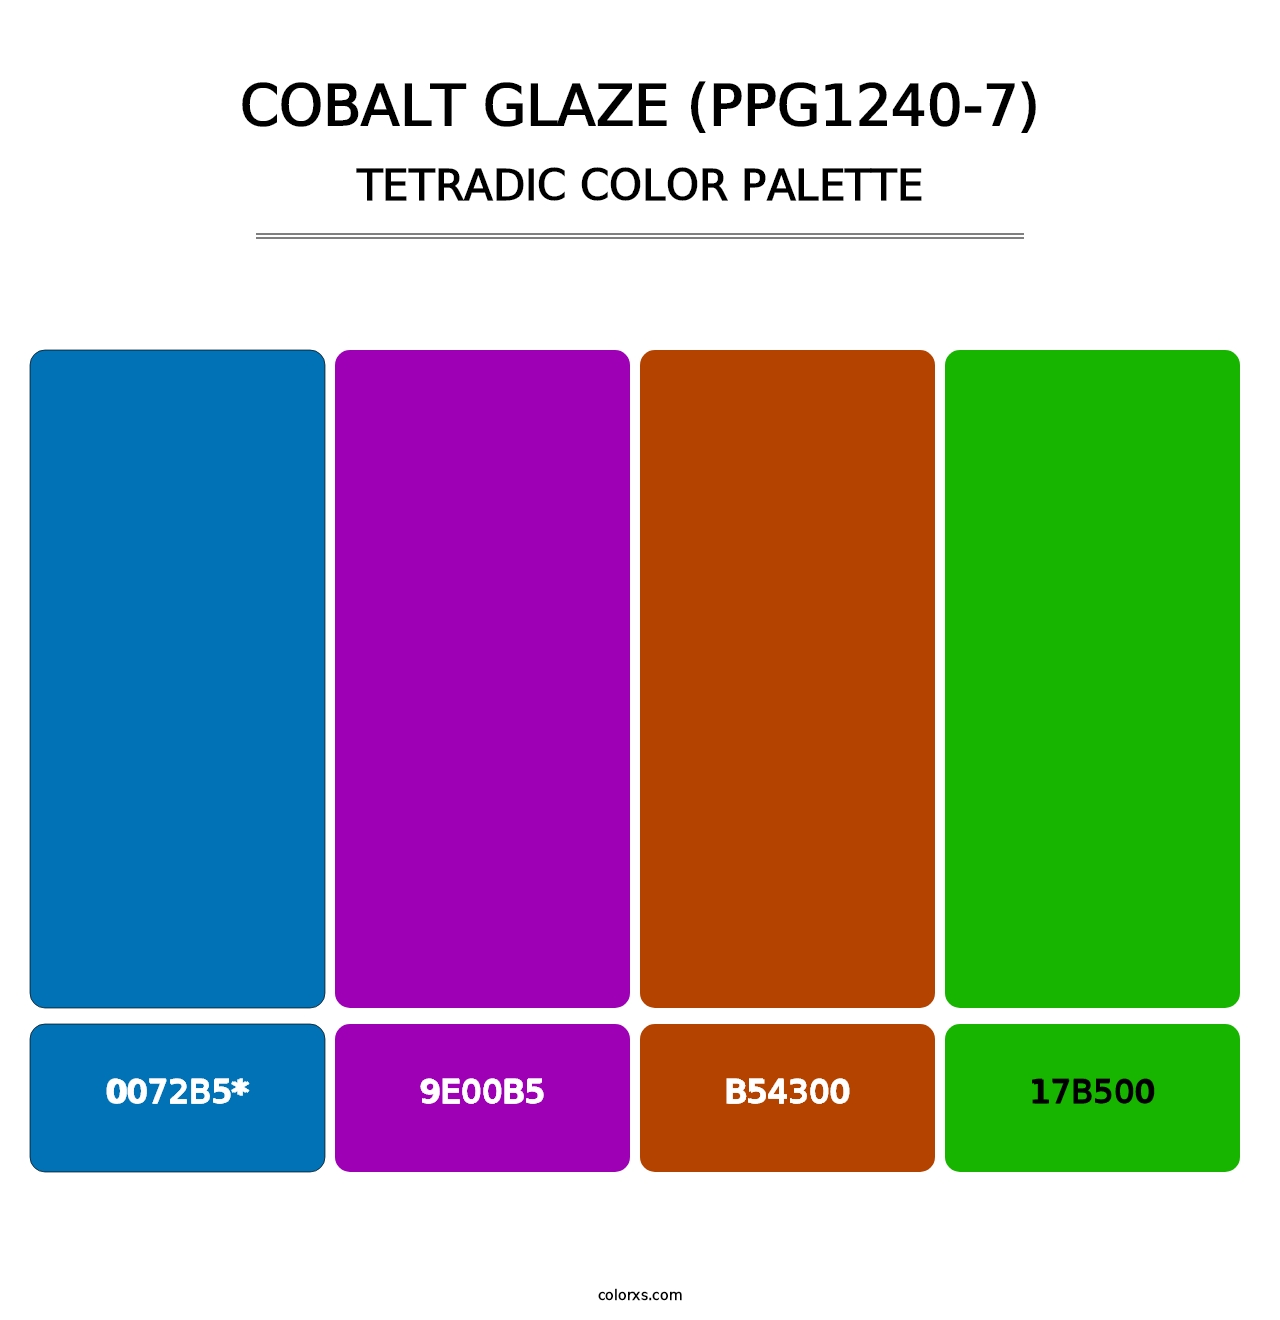 Cobalt Glaze (PPG1240-7) - Tetradic Color Palette